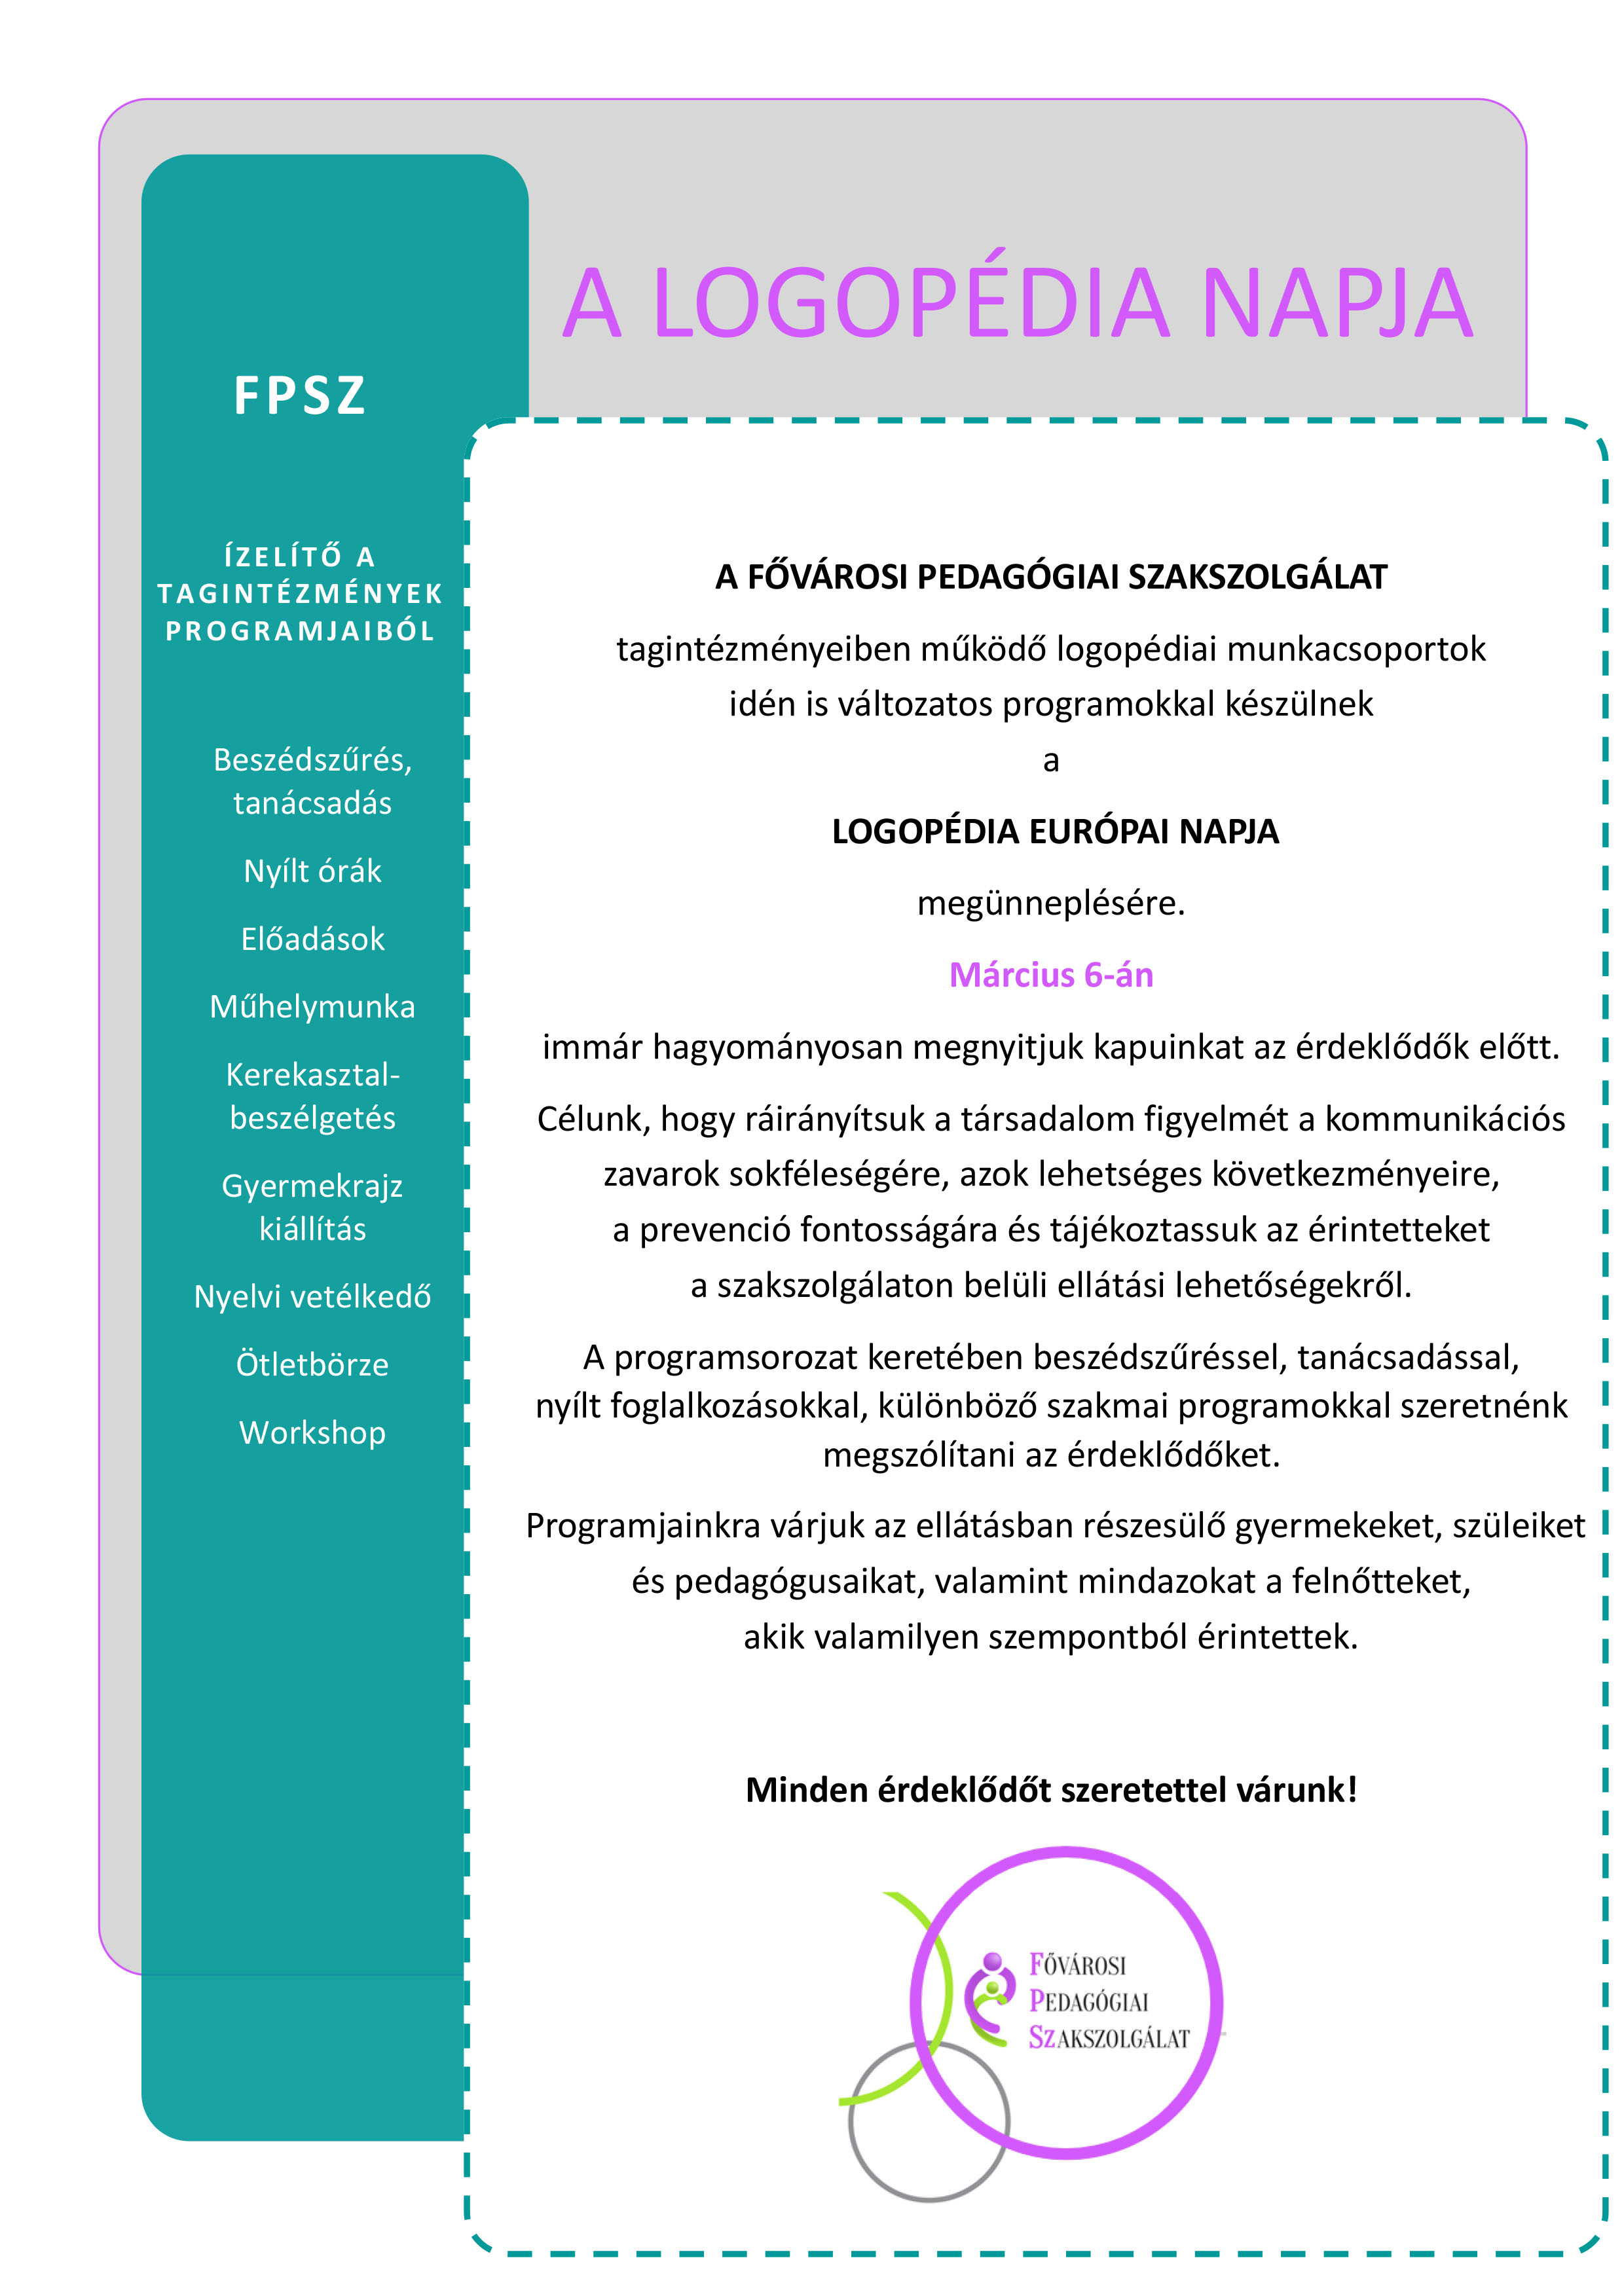 LogopediaEuropaiNapja2017_FPSZ-1